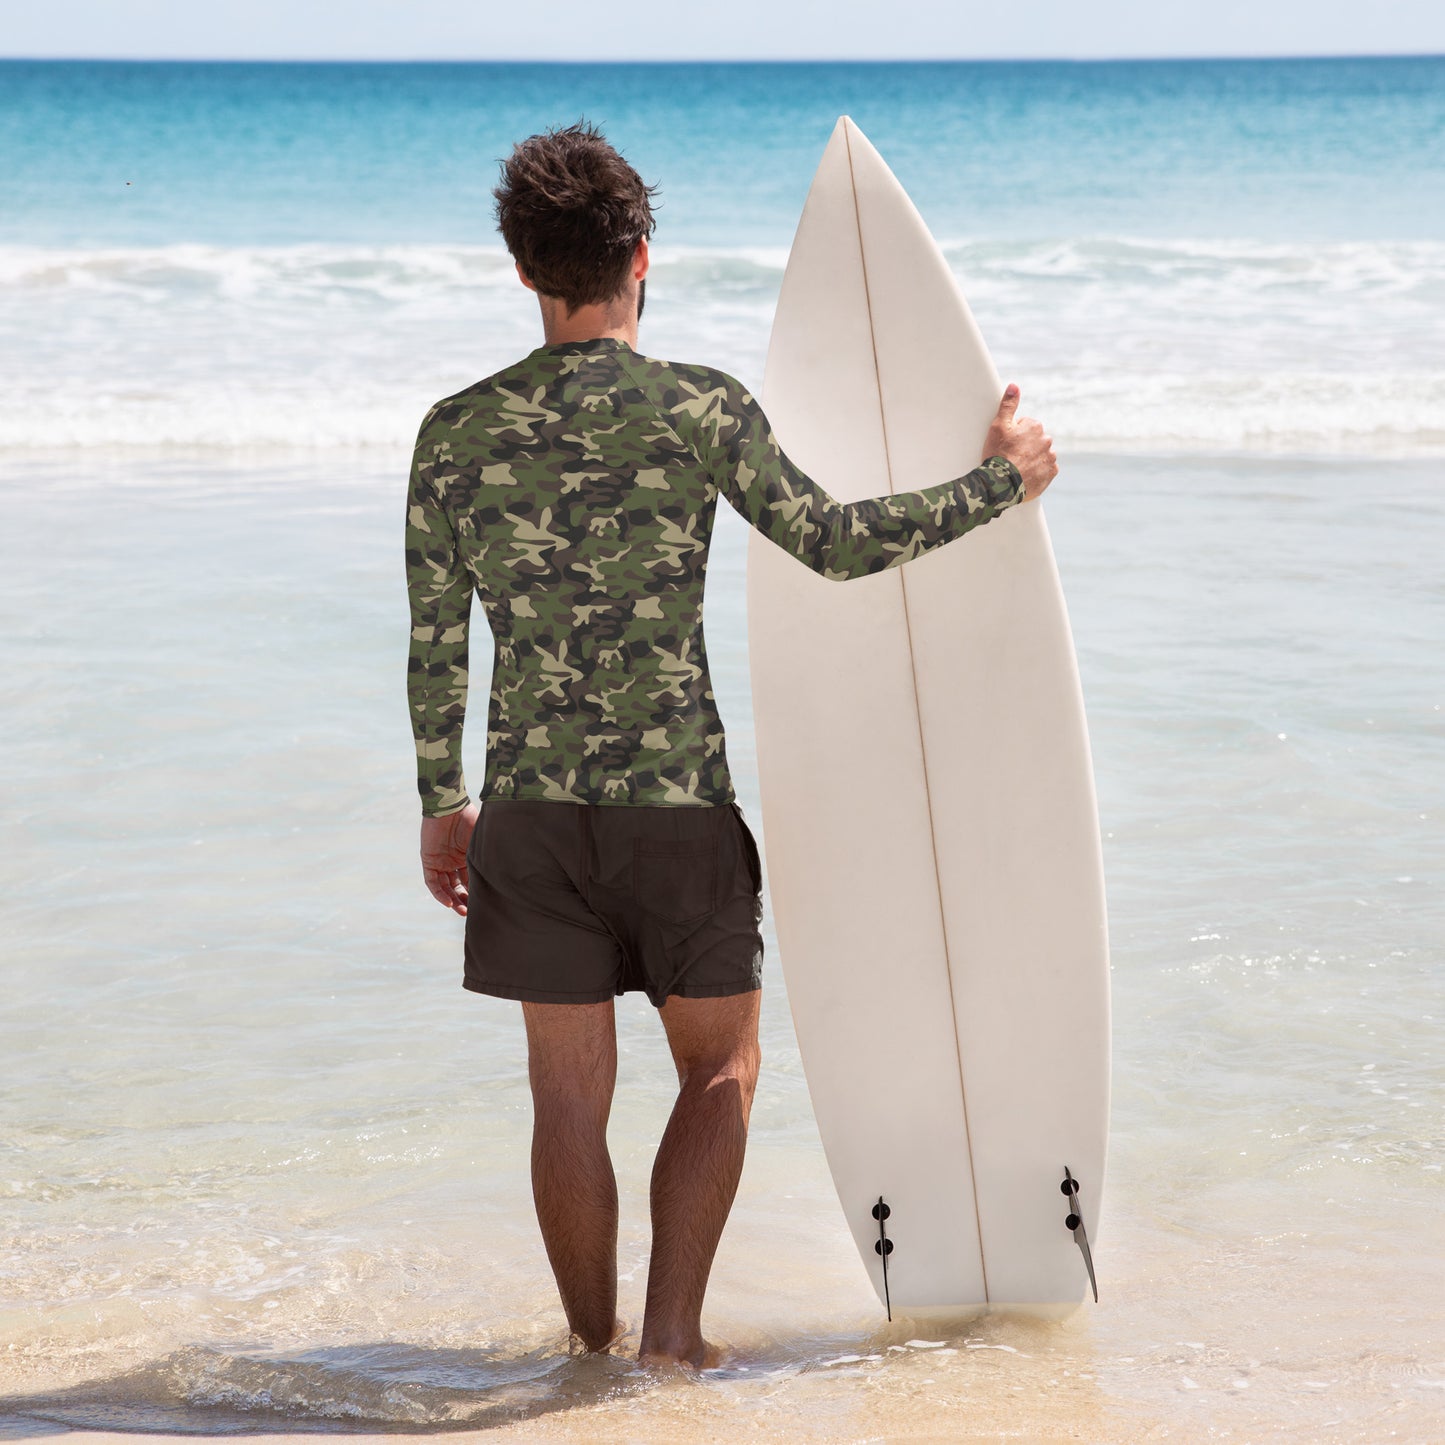 Camo Men Rash Guard, Green Camouflage Print Surf Long Sleeve Swim Shirt Swimwear Sun Beach Designer Wet Suit Army Protection 40 UPF